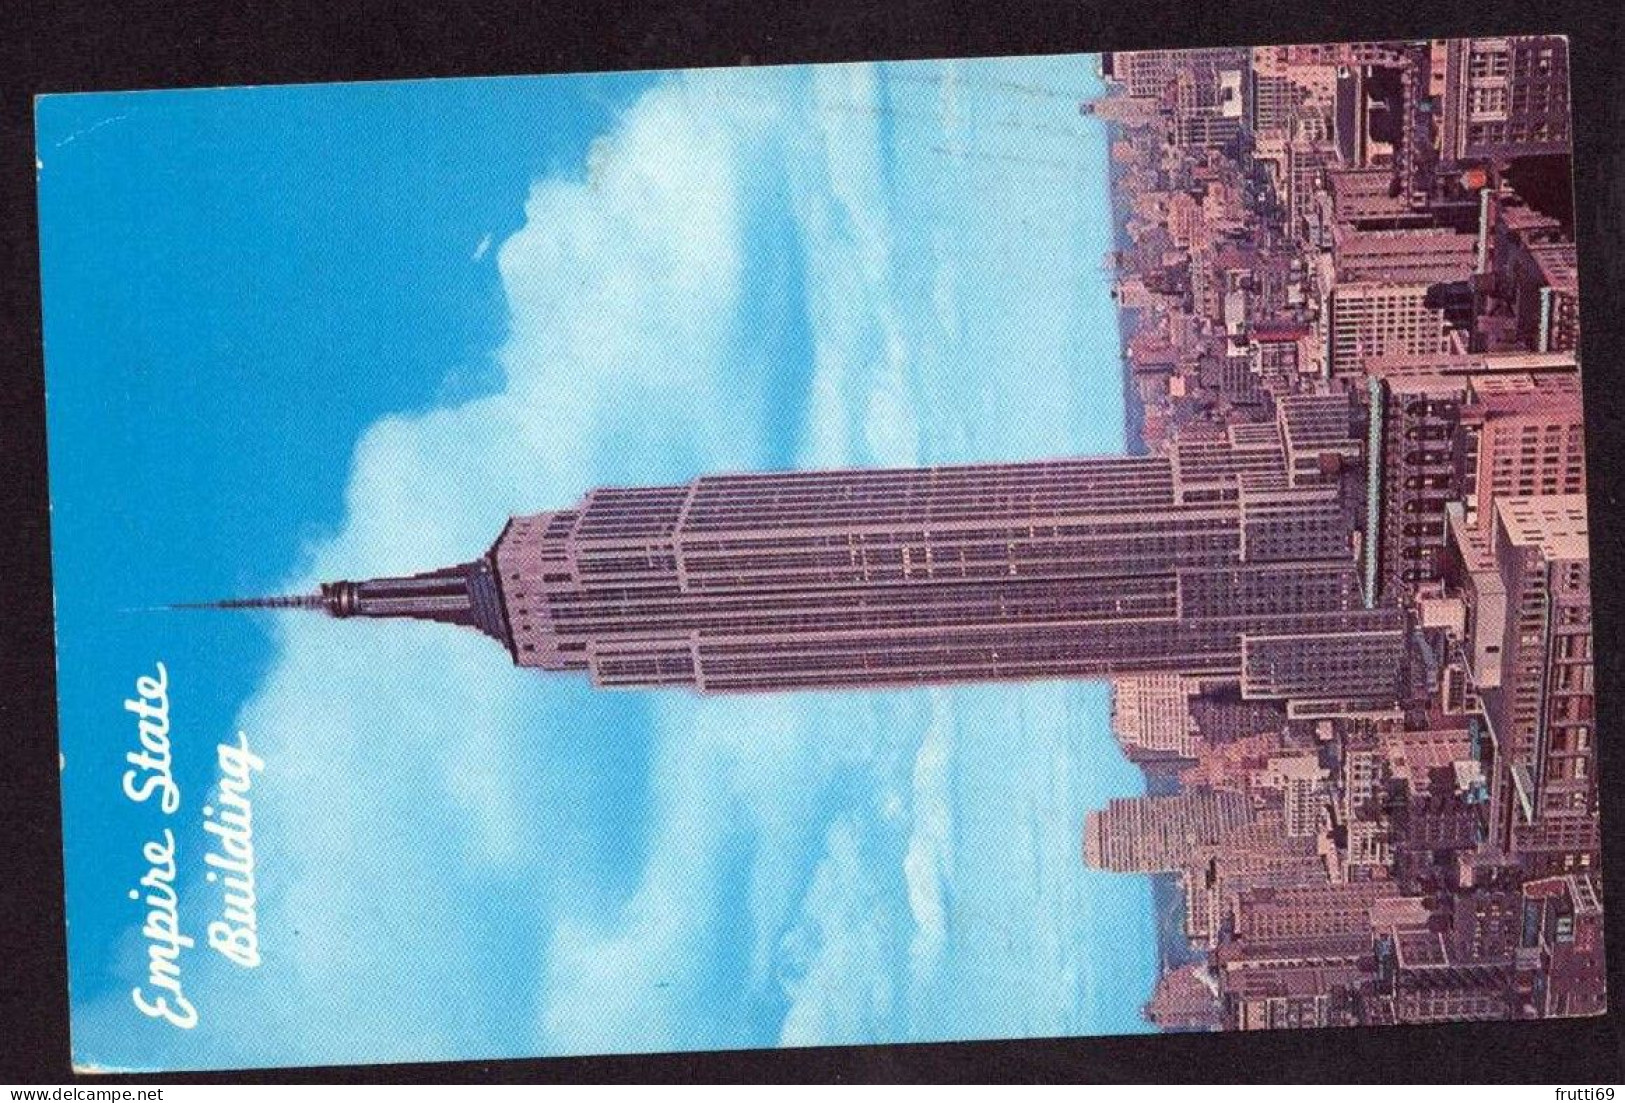 AK 125780 USA - New York City - Empire State Building - Empire State Building